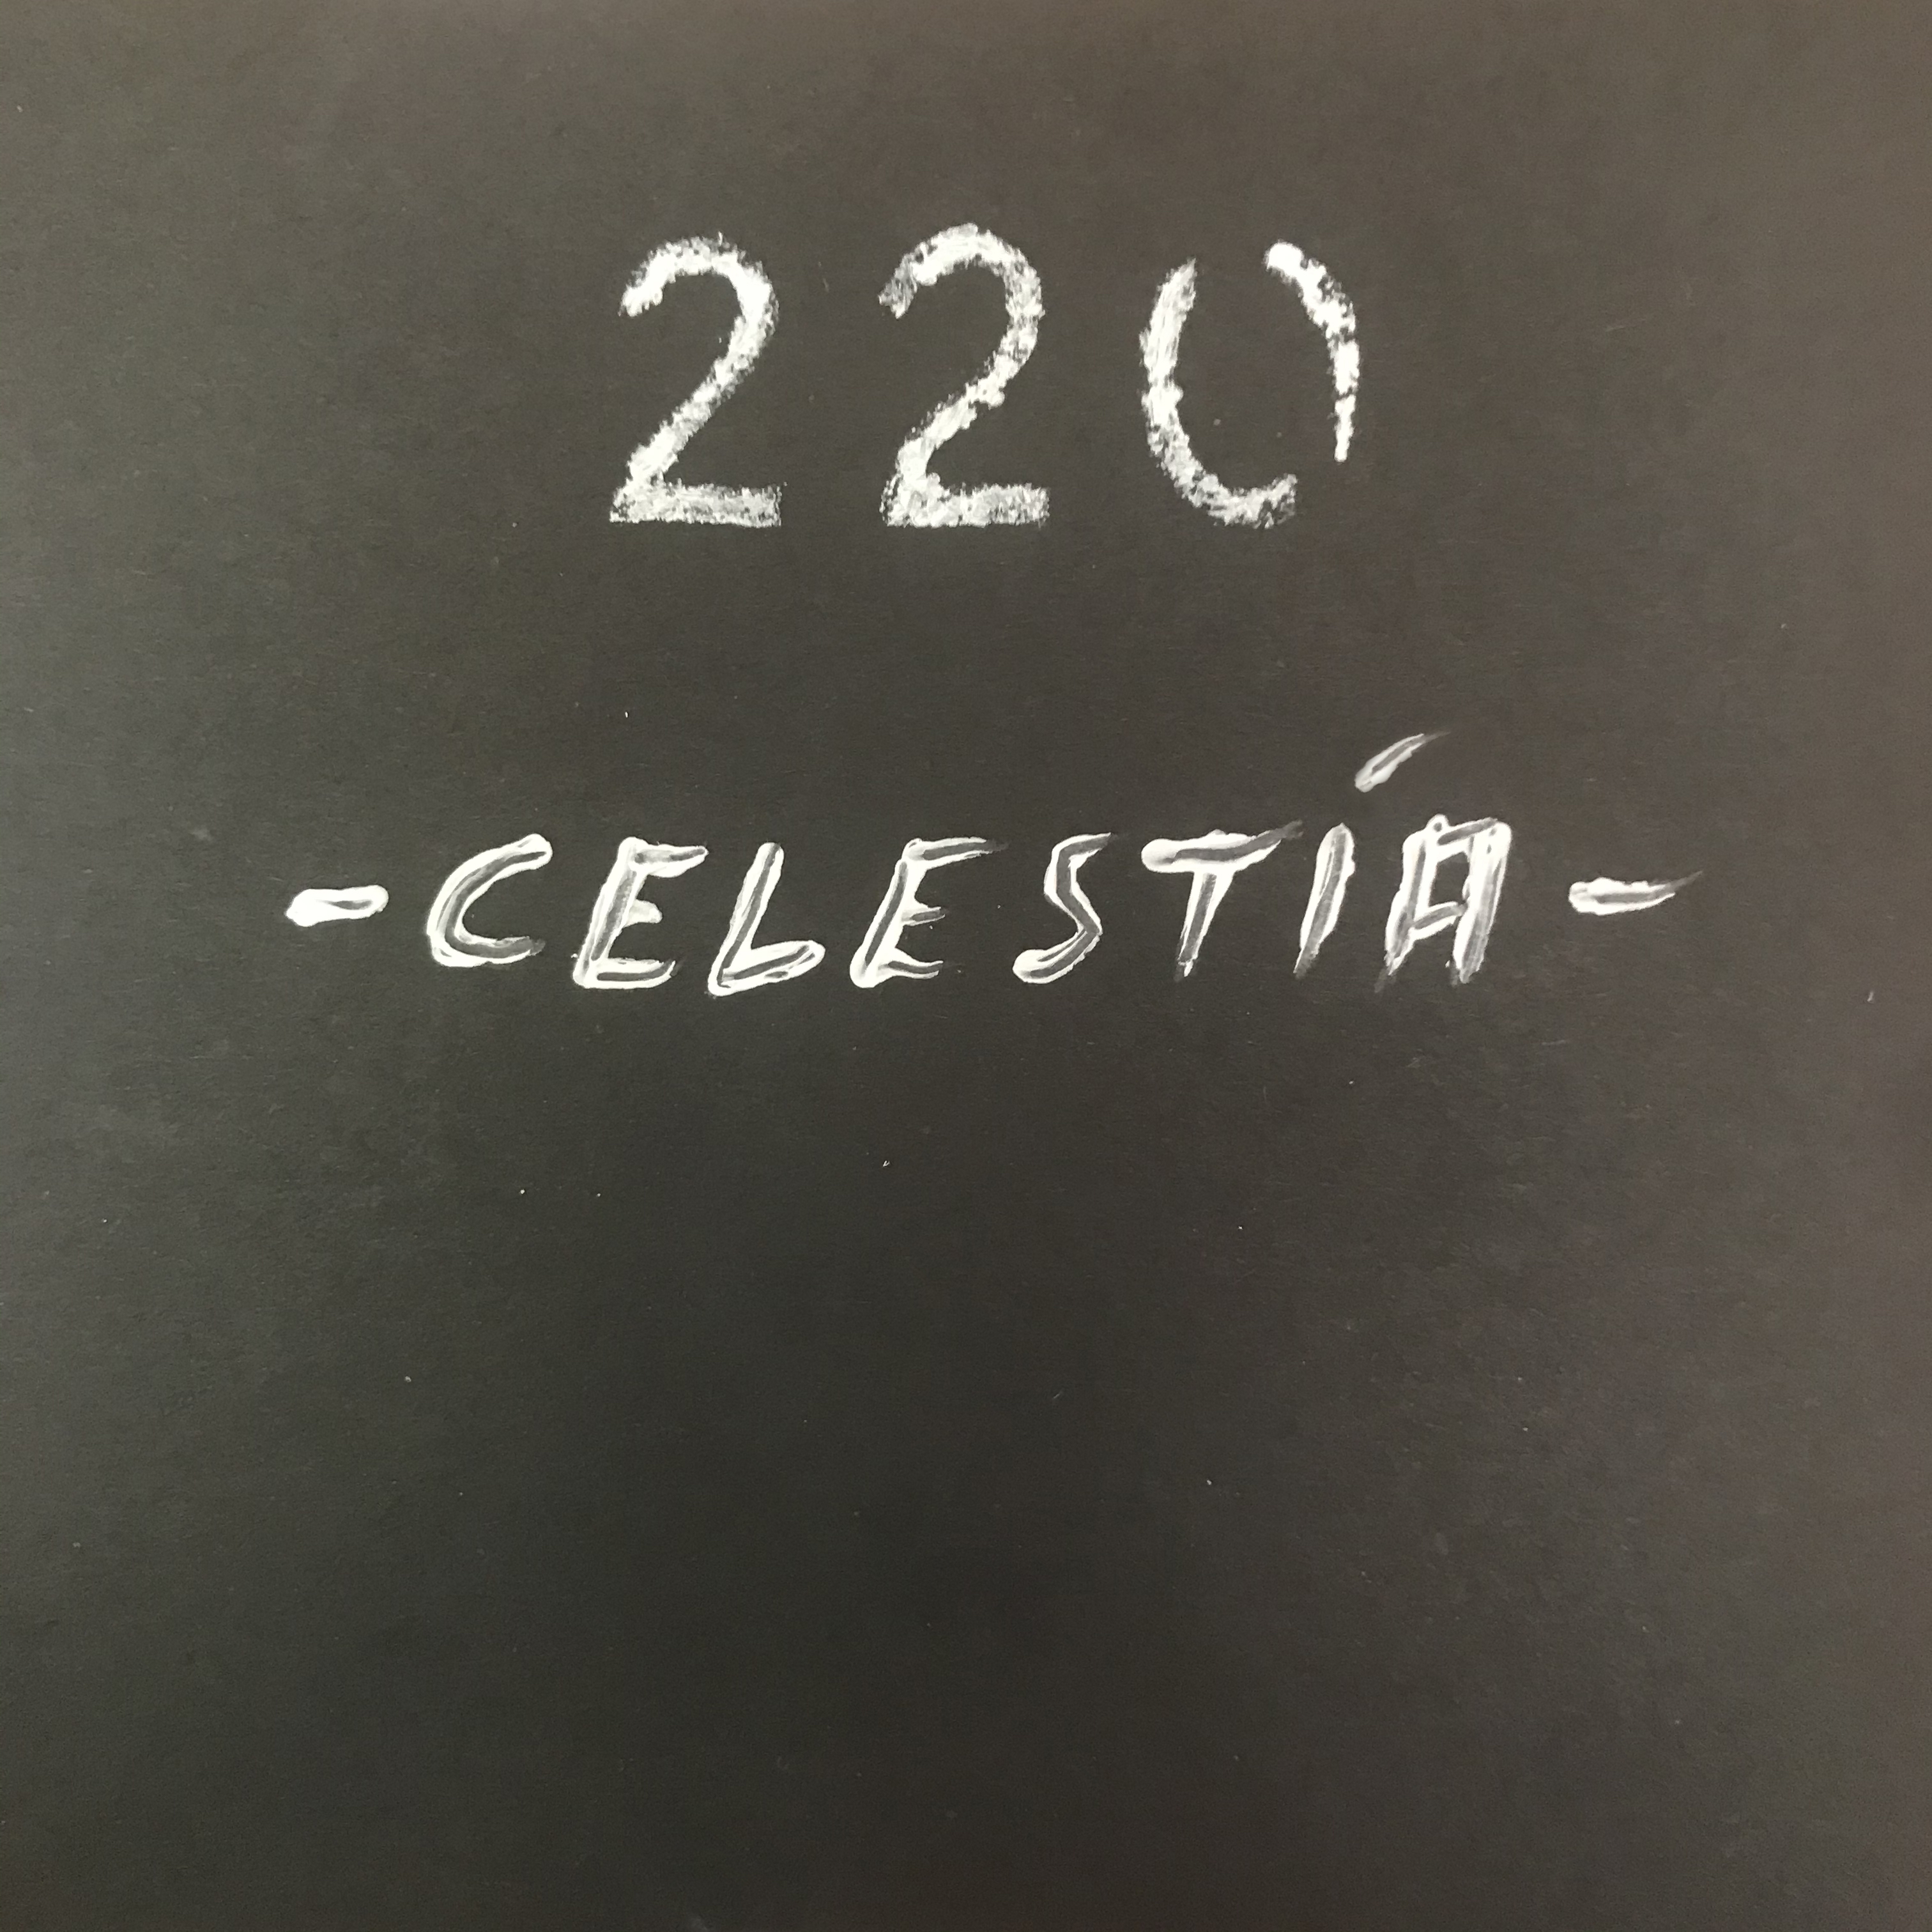 220:Celestía simi